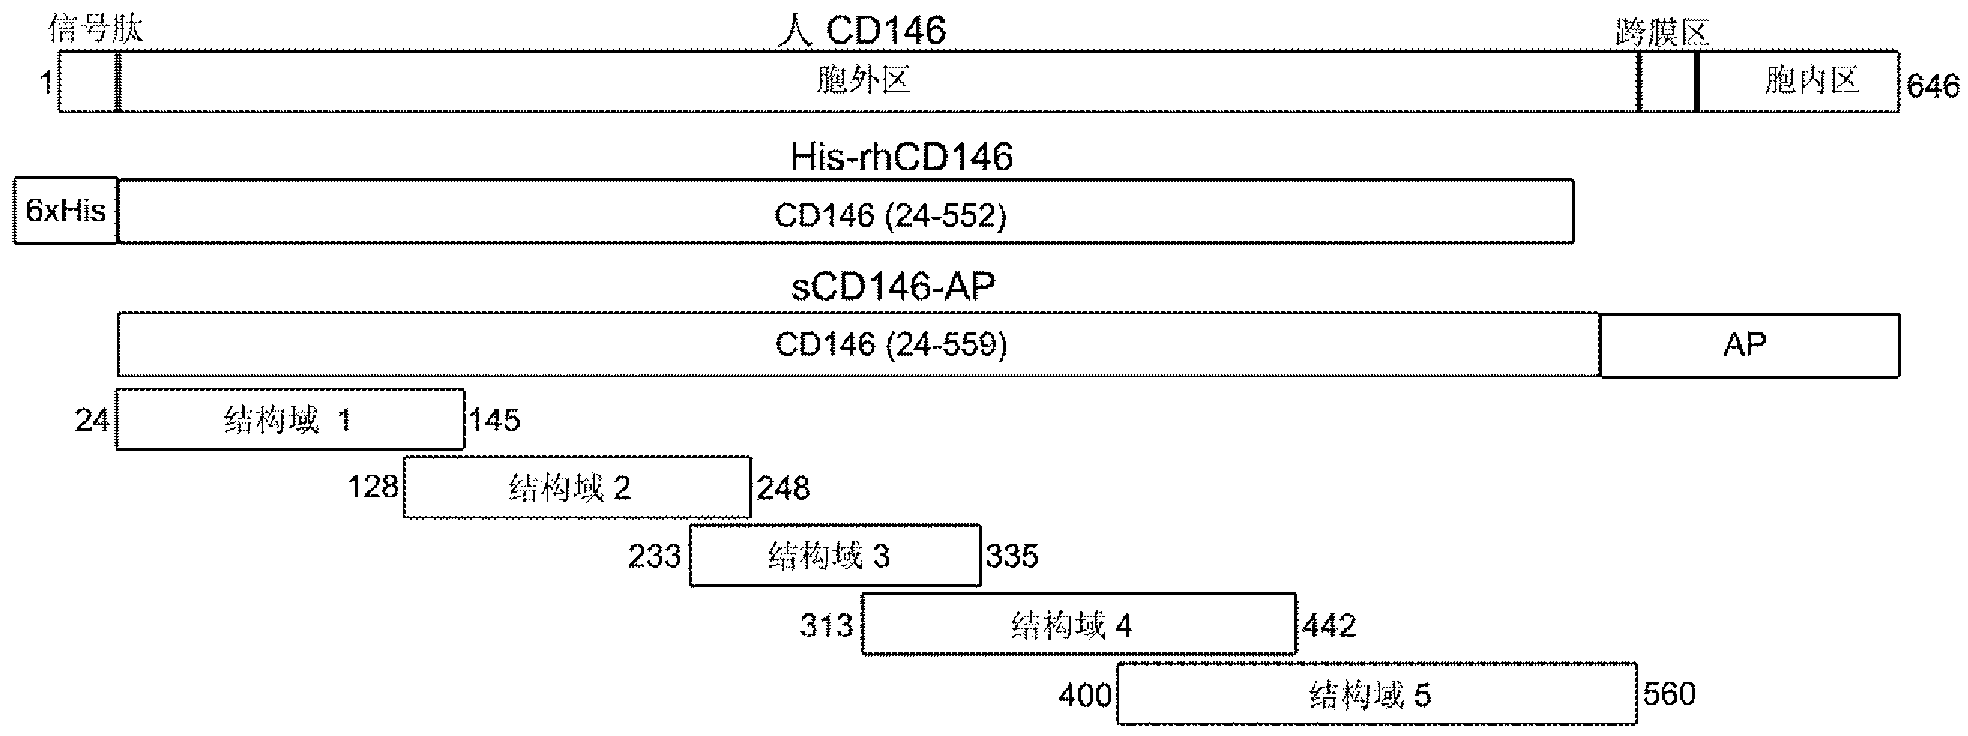 Anti-human CD146 monoclonal antibodies, compositions containing anti-human CD146 monoclonal antibodies, and soluble CD146 detection method